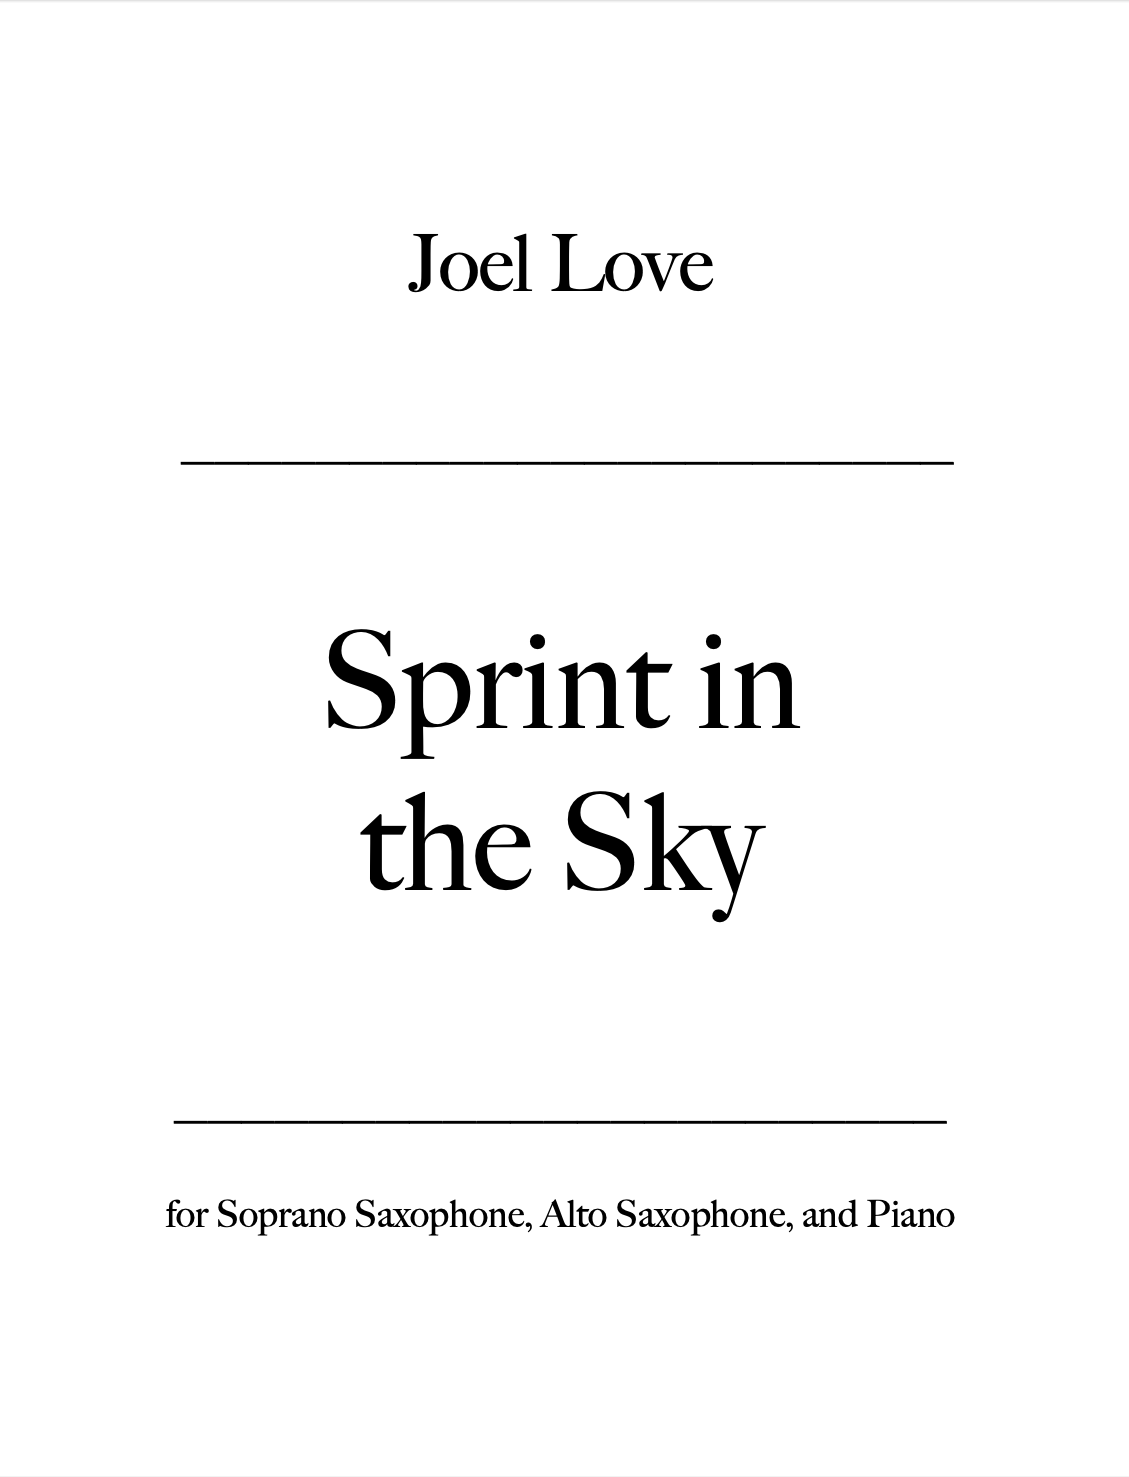 Spirit In The Sky by Joel Love